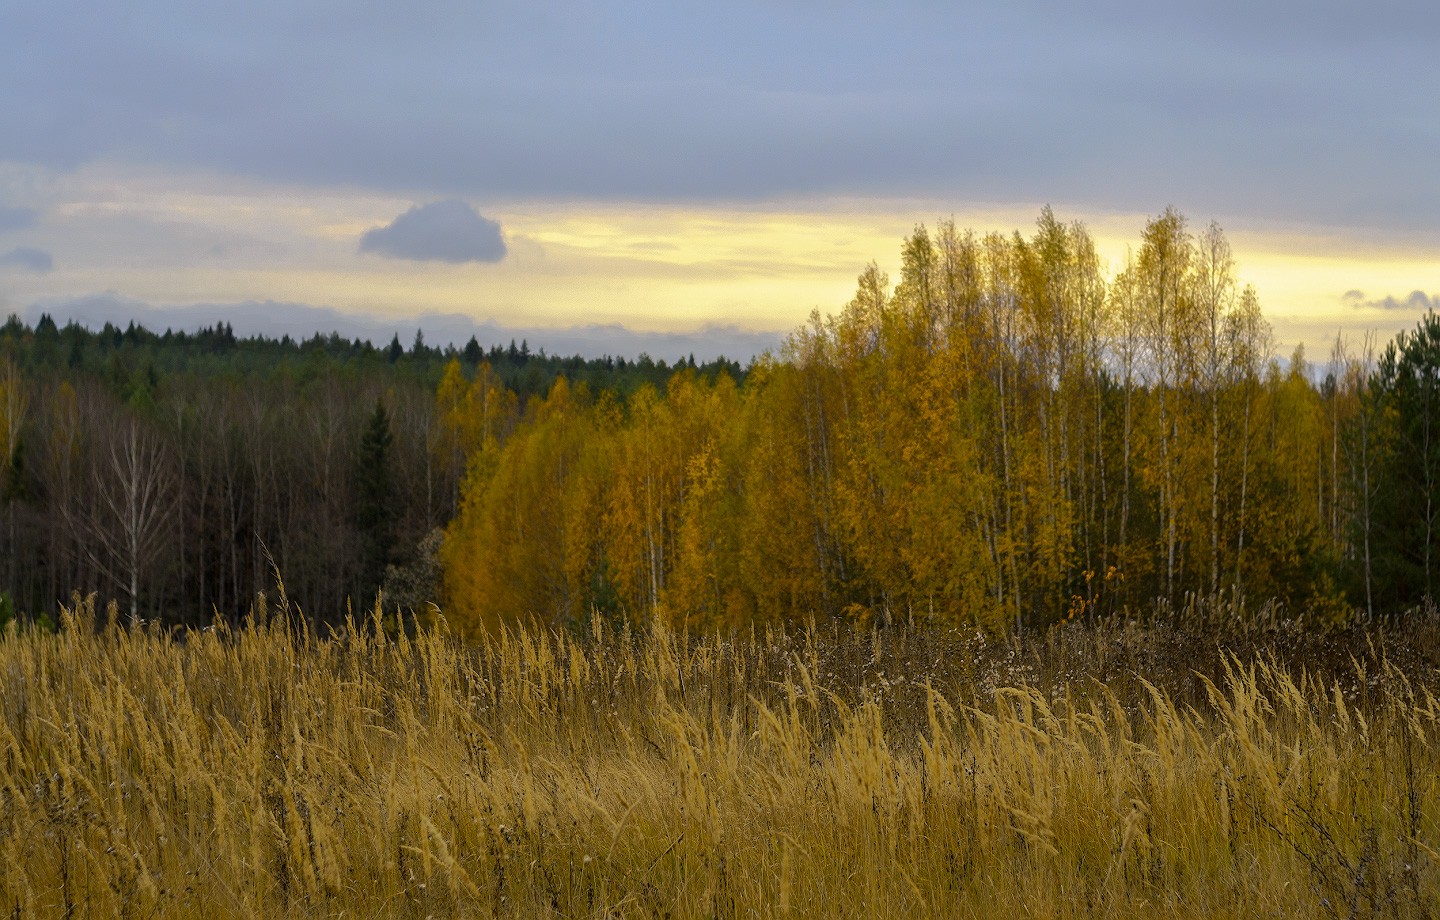 Фотография - Осенний вечер, автор - Валентин Котляров